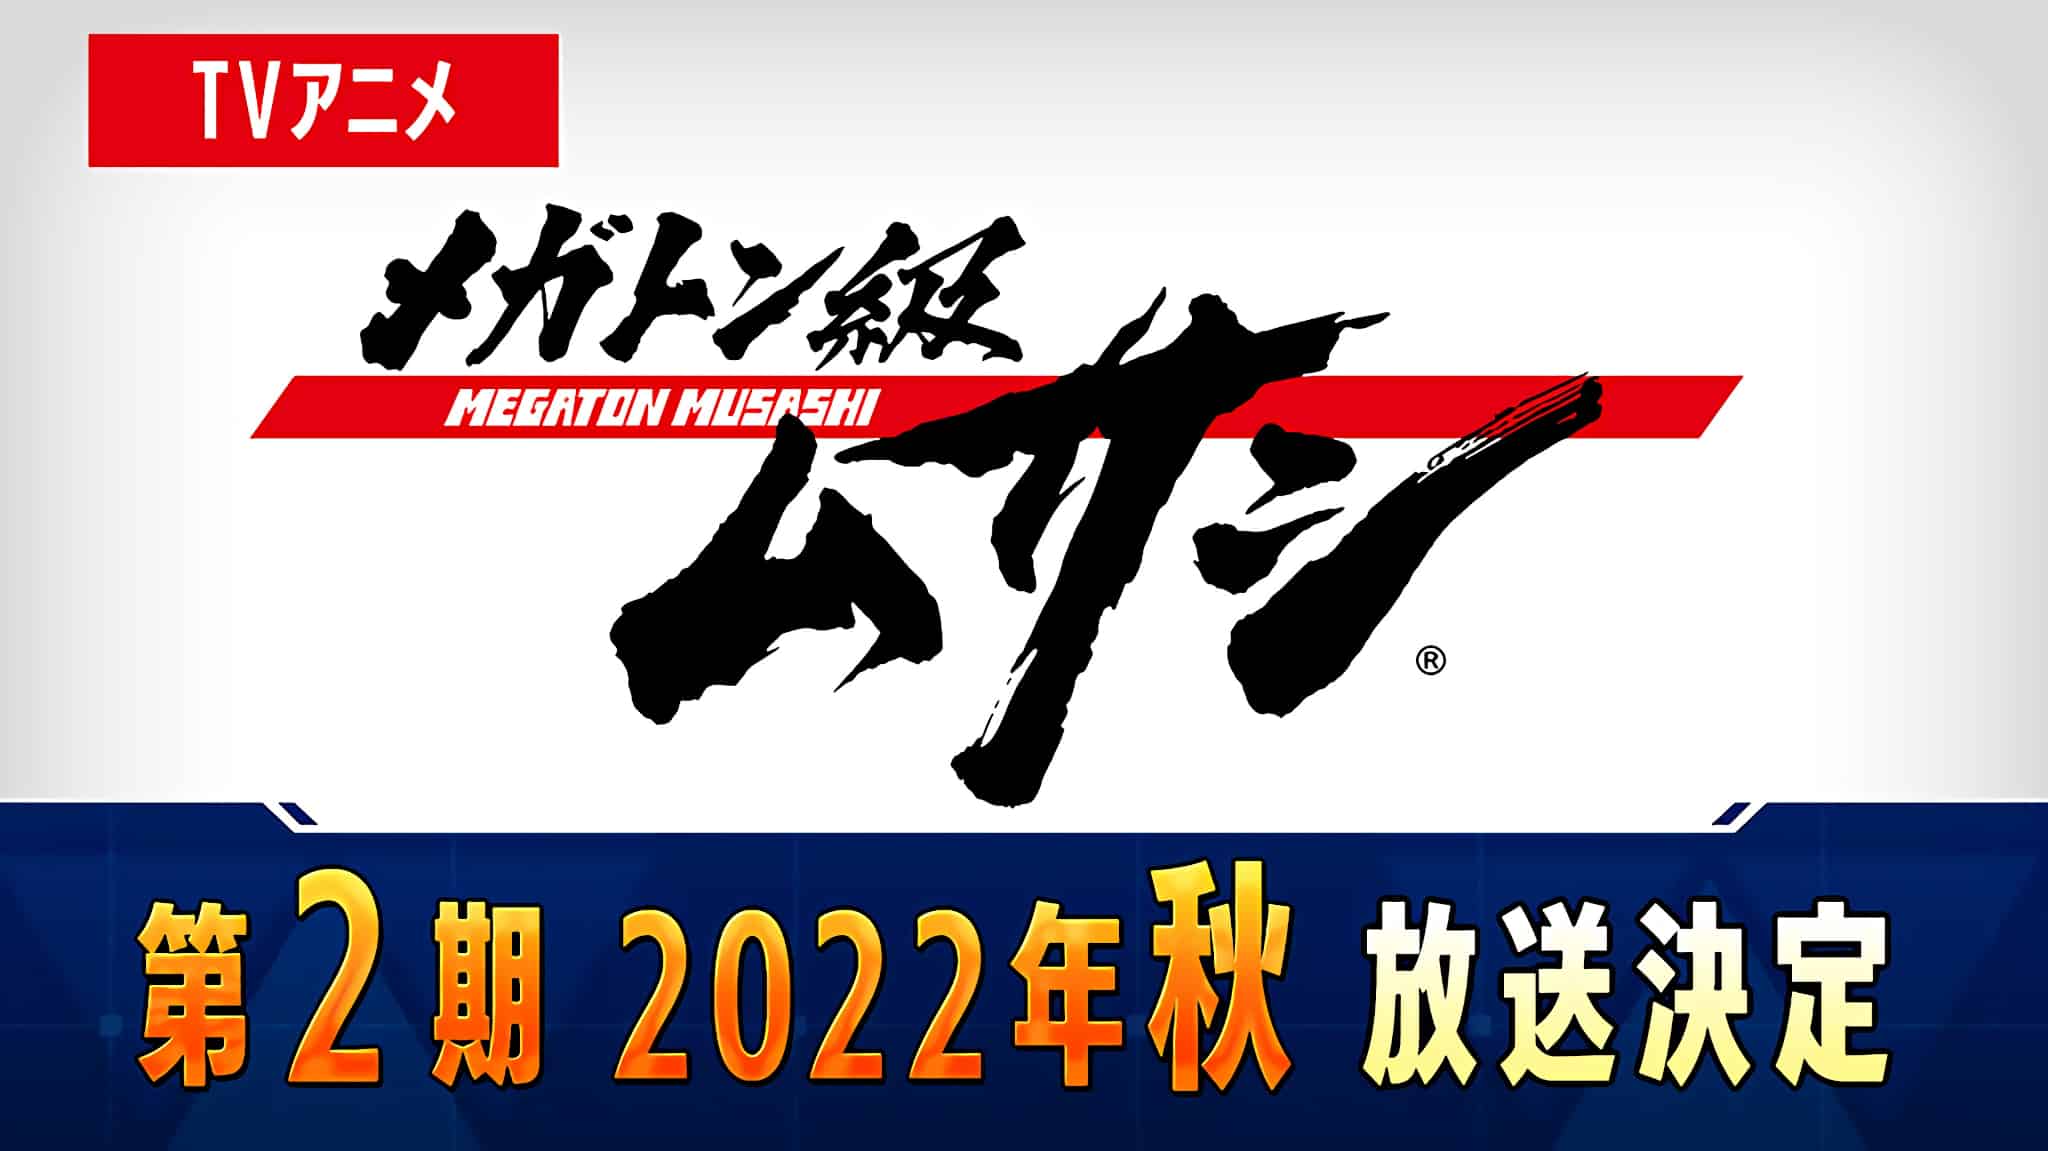 Annonce de lanime Megaton Musashi Saison 2